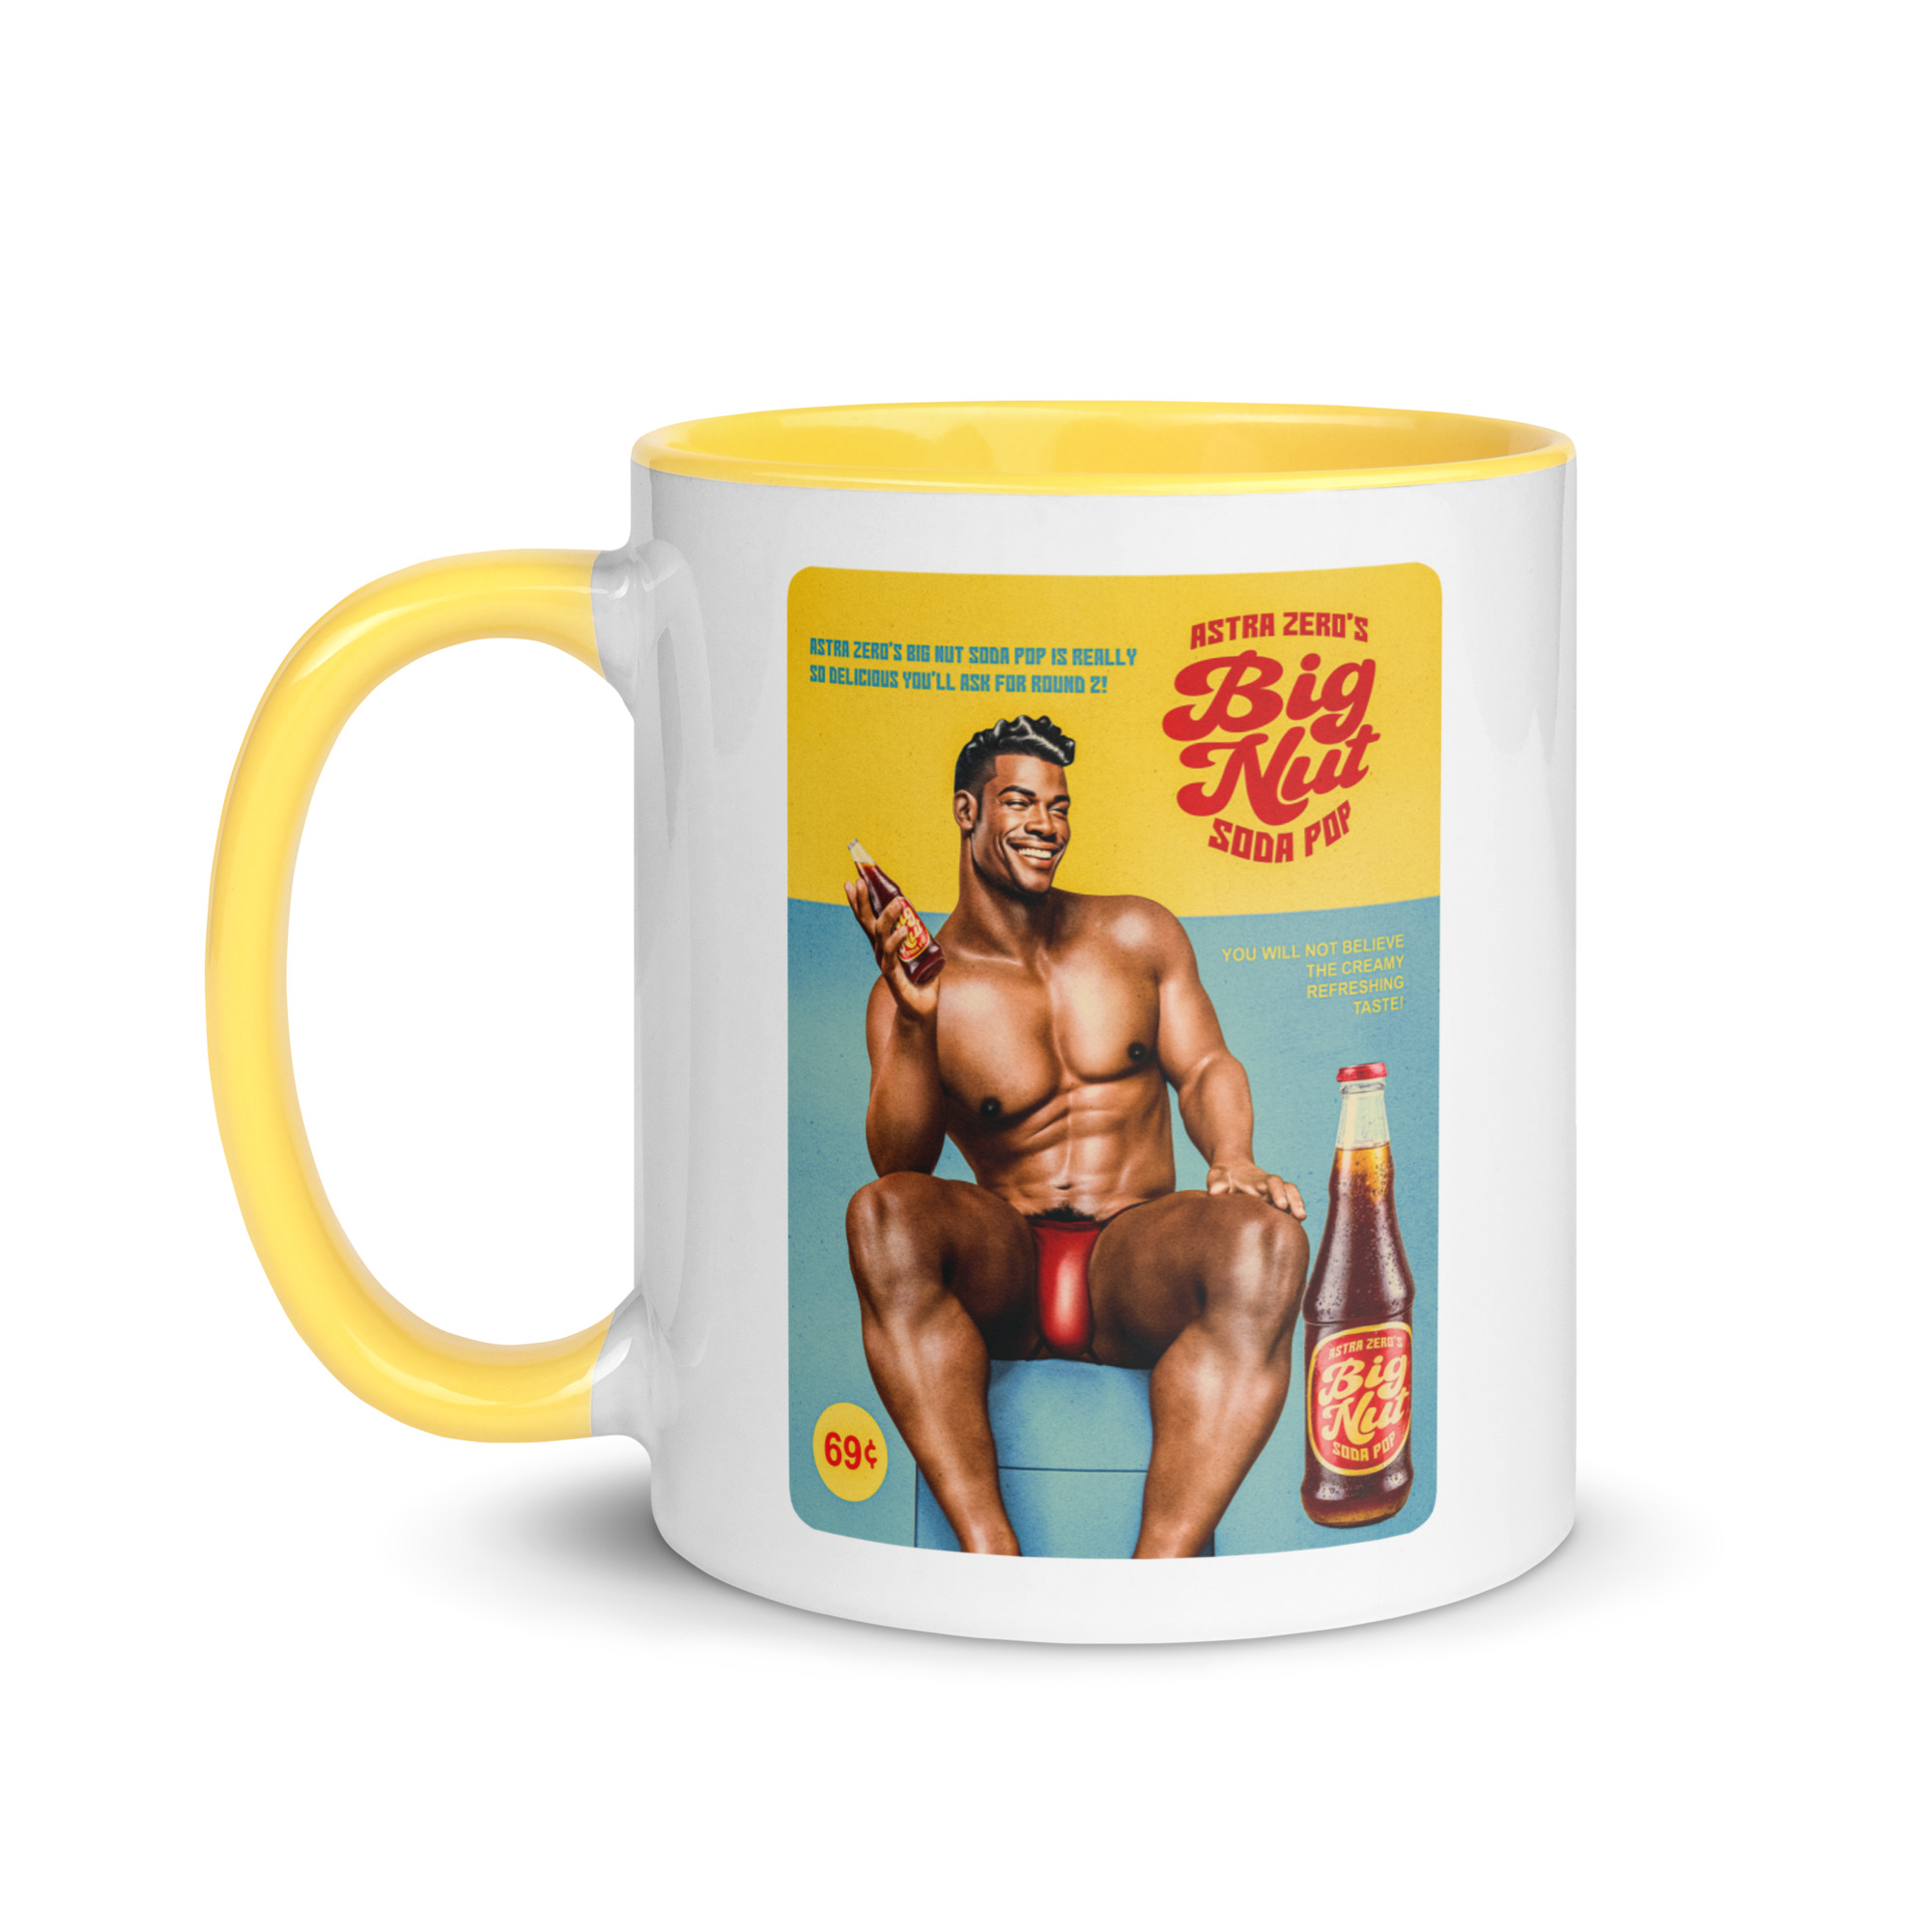 Featured image for “Big Nut Soda Pop - Mug with Color Inside”